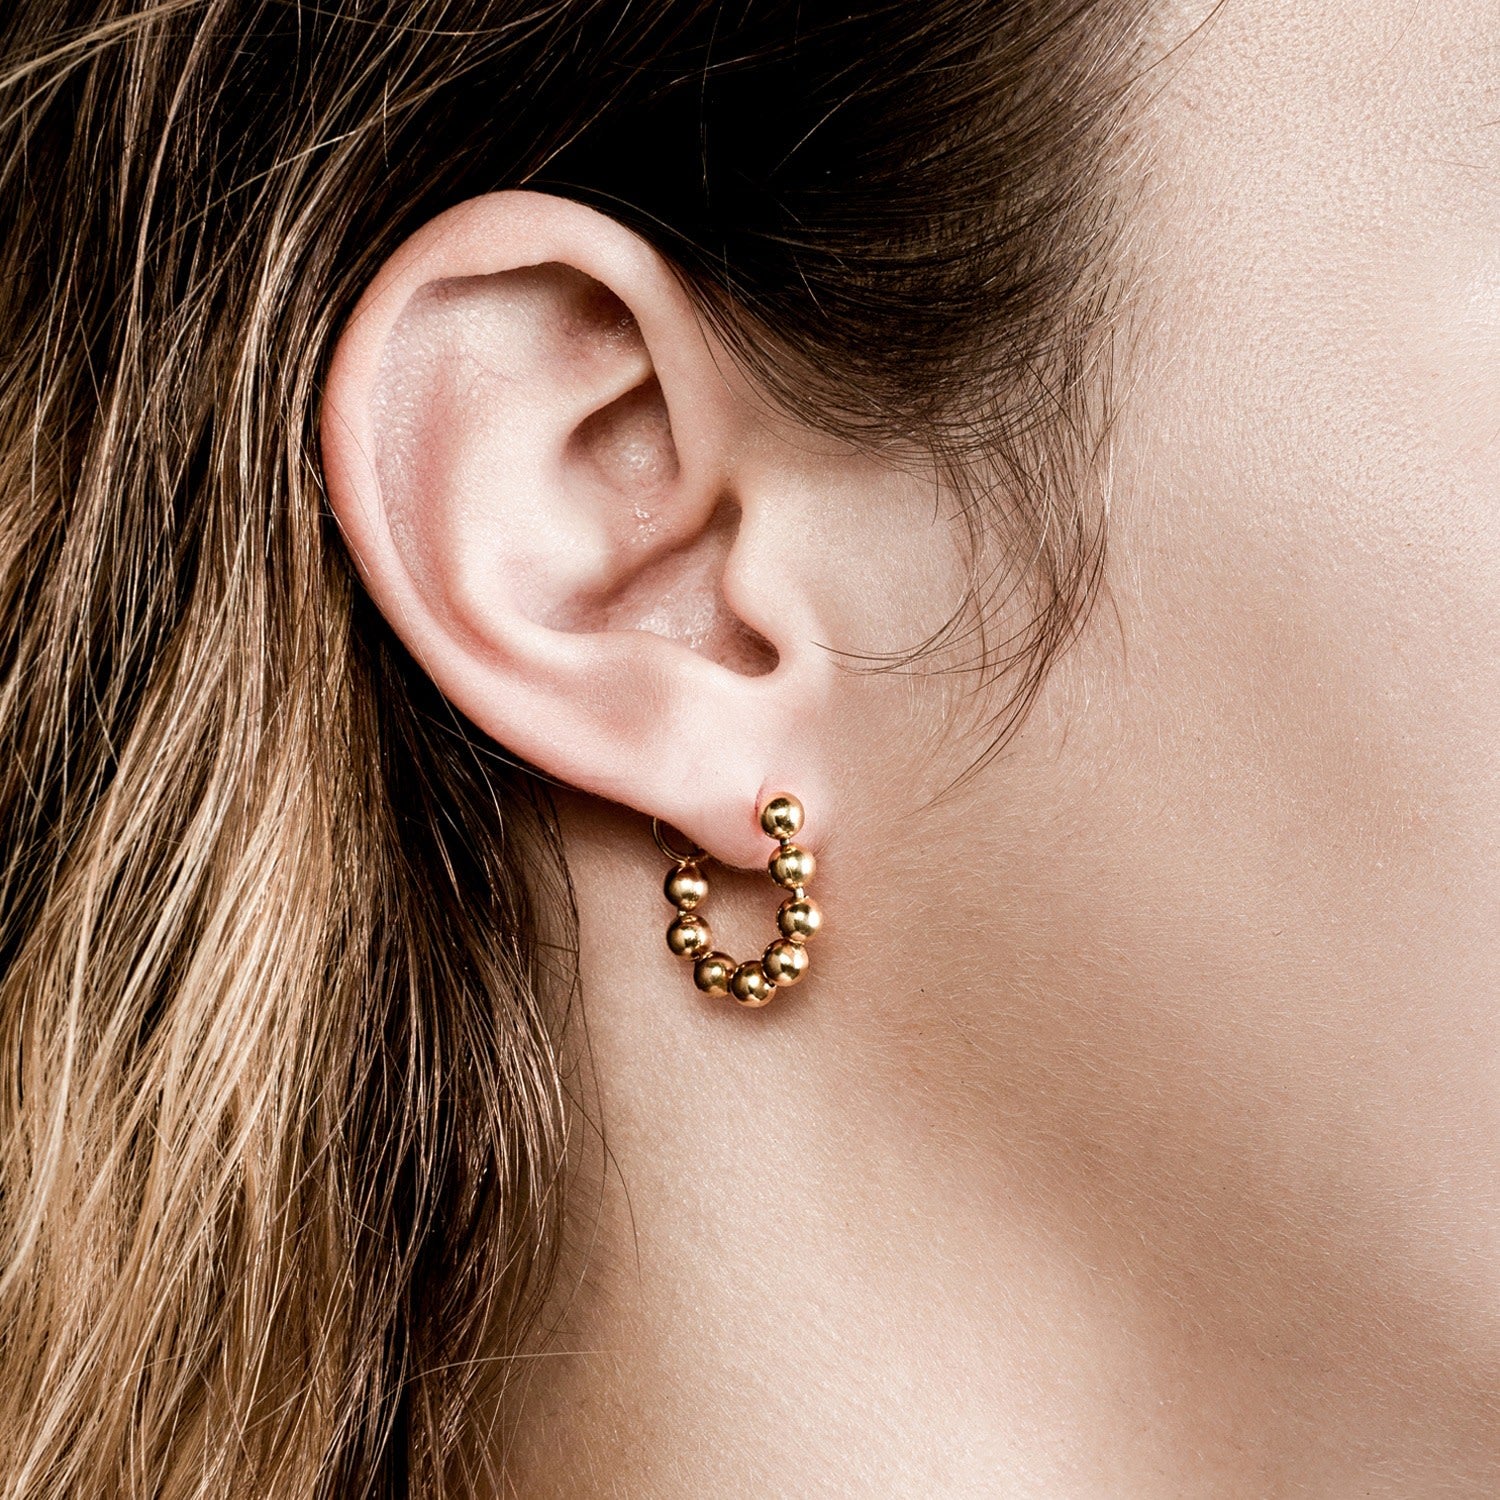 Big Beads Chain Earring w/ O-ring Hook Vermeil